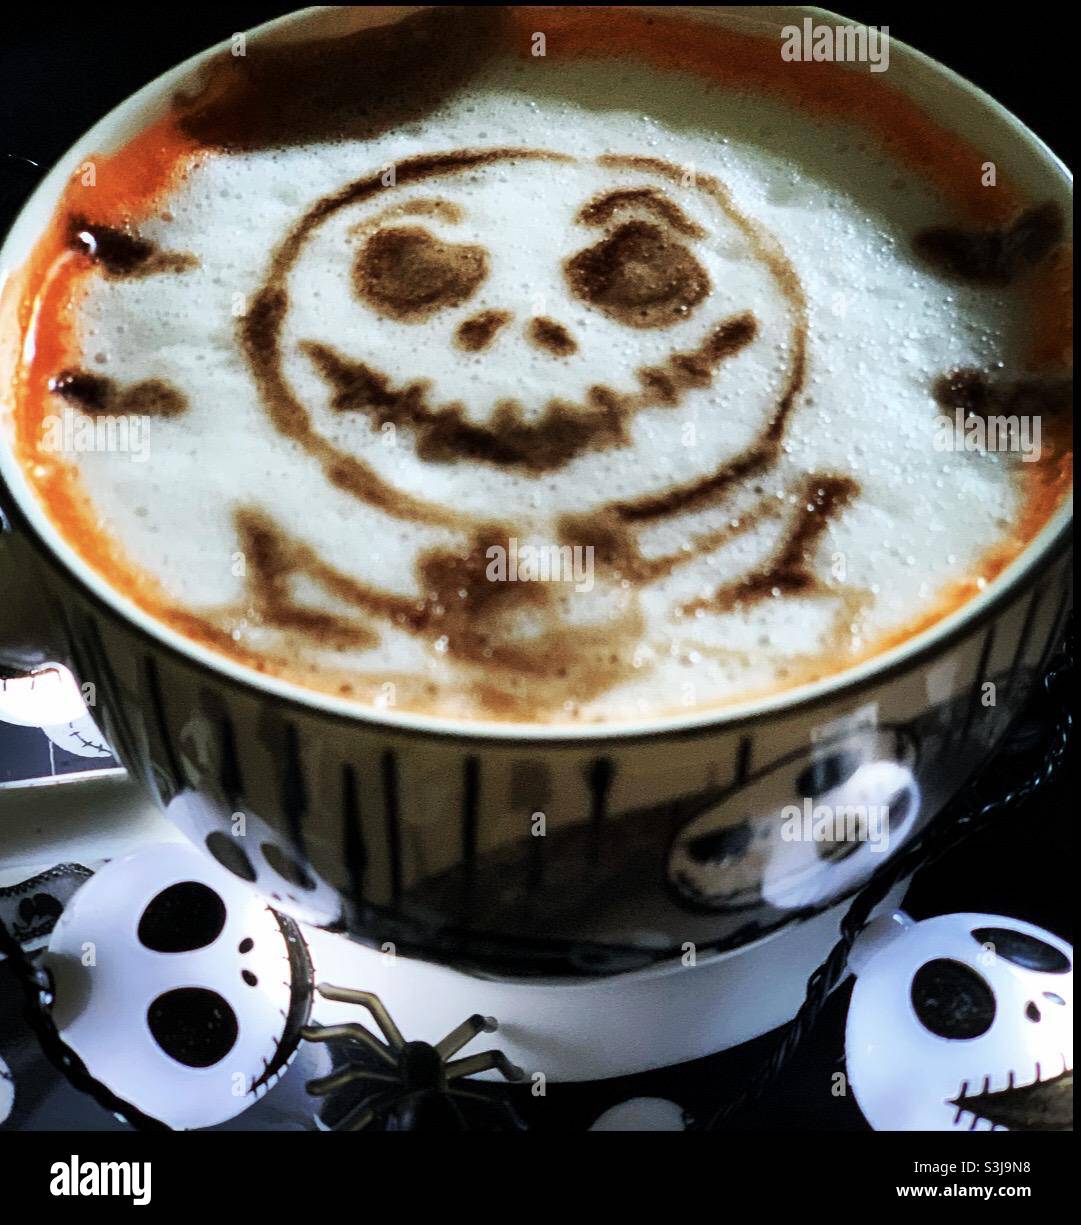 Disney Jack skellington Halloween Latte Art Stock Photo